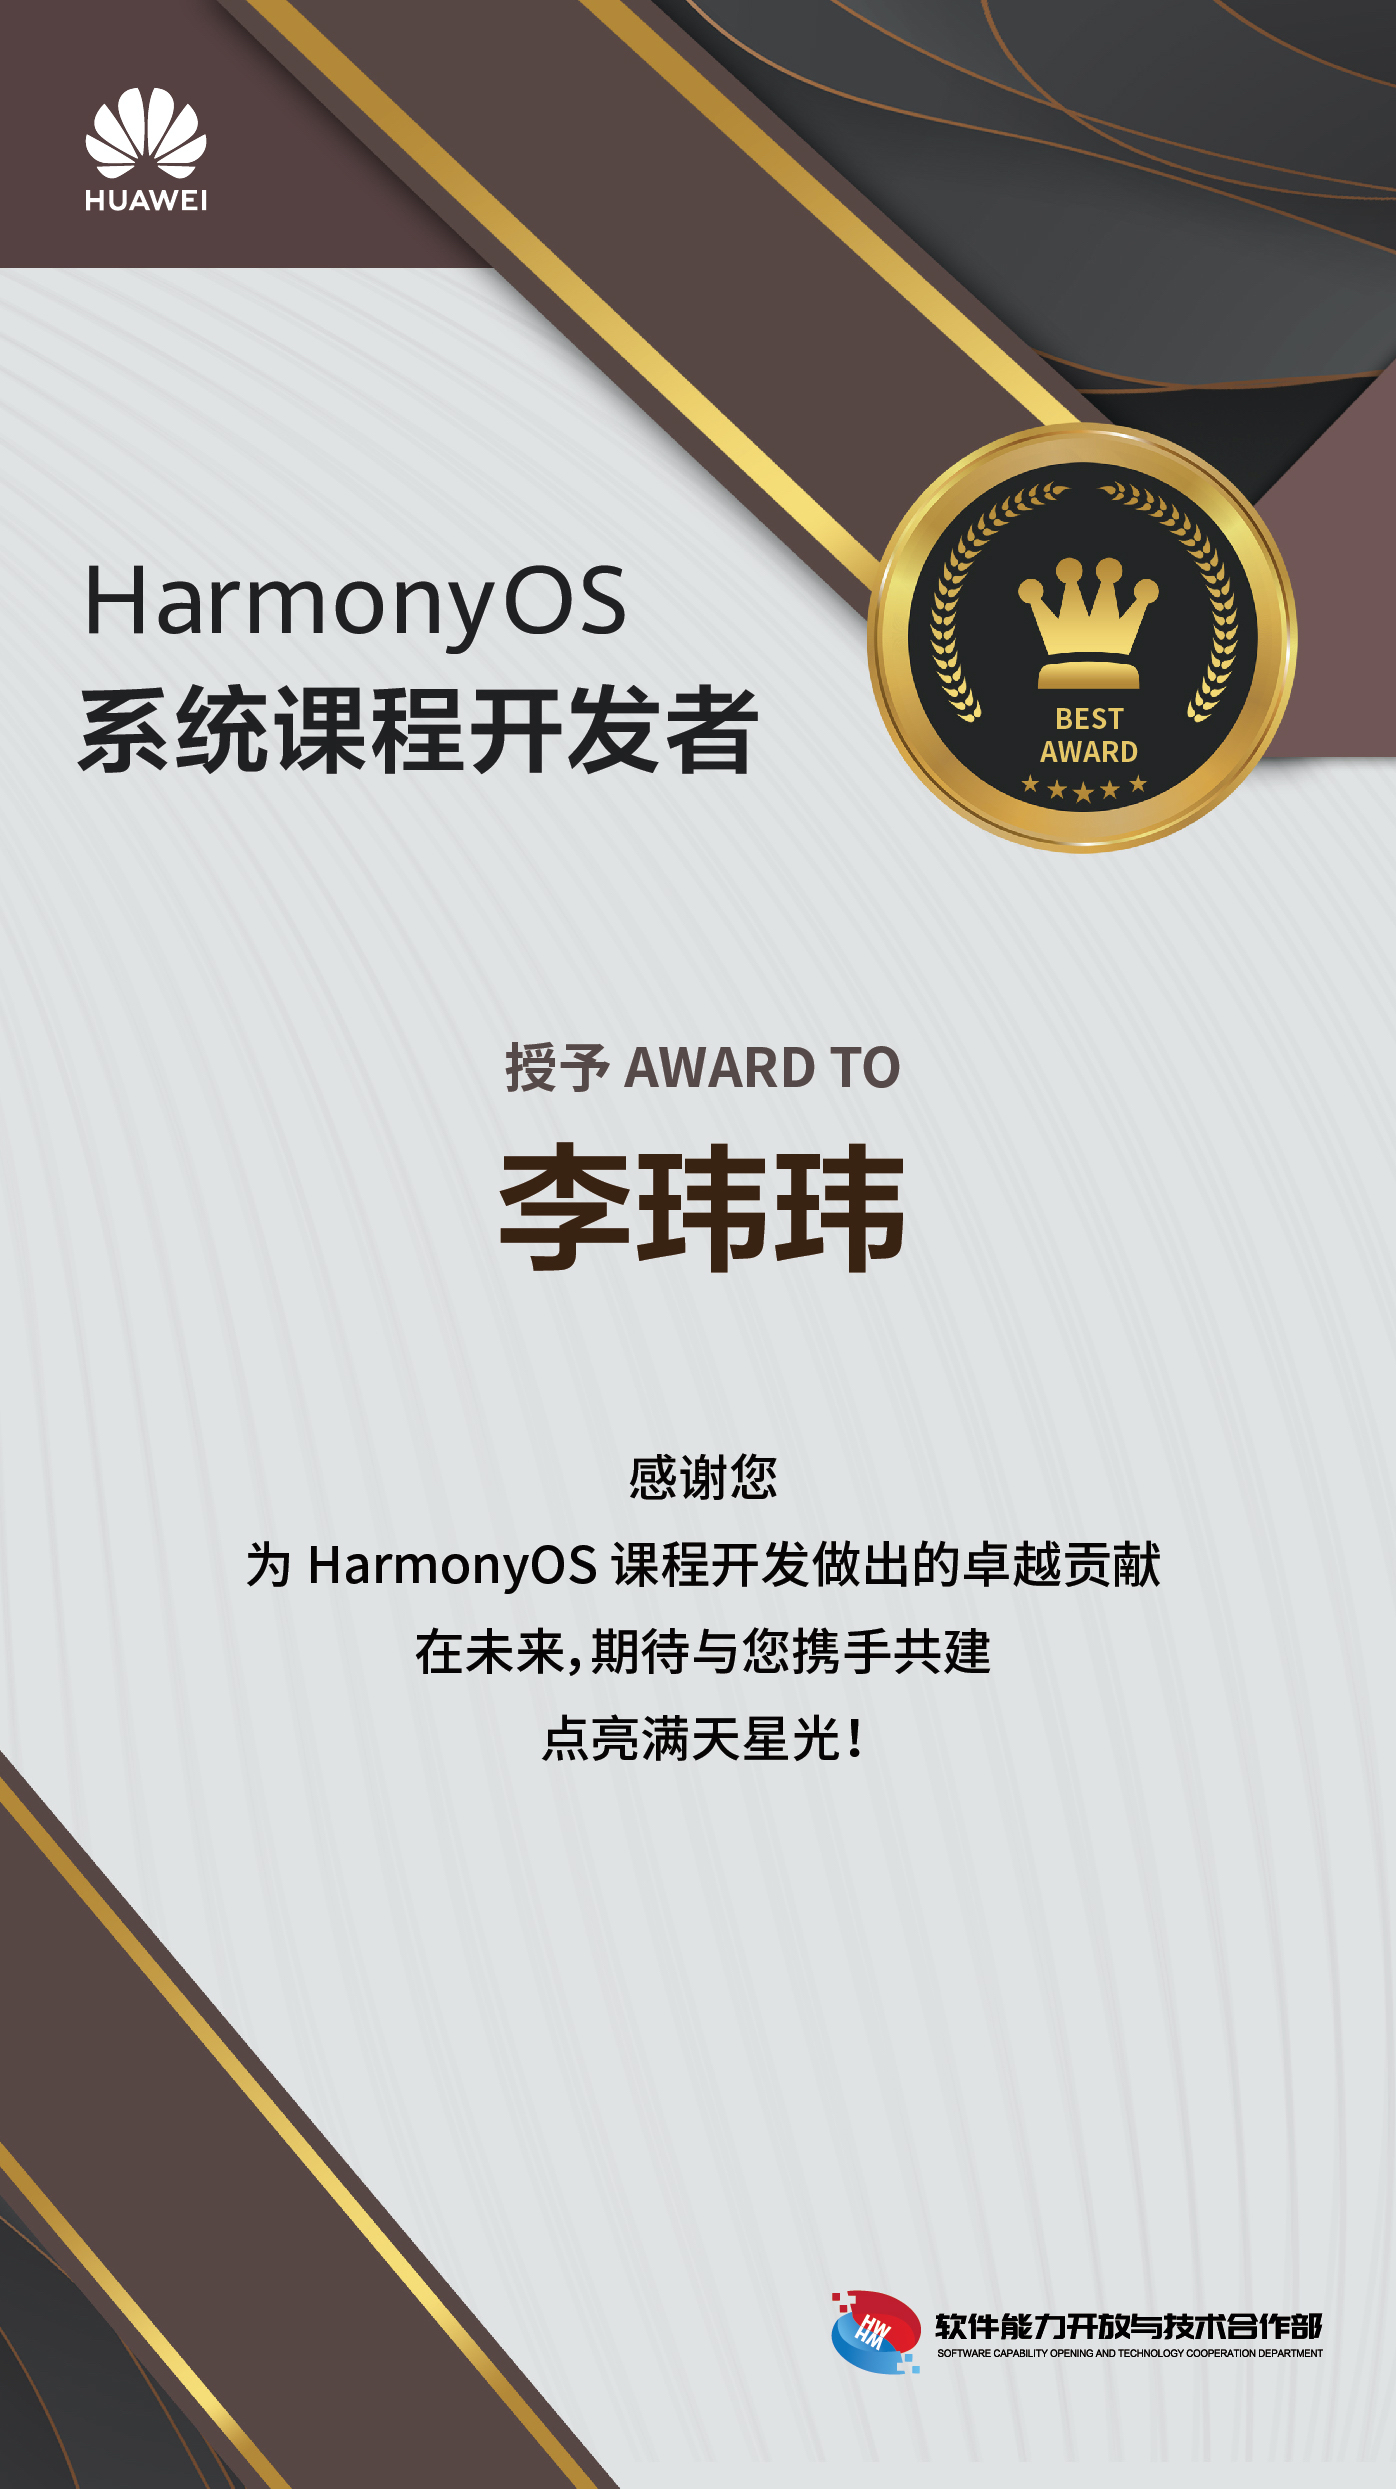 HarmonyOS是什么？鸿蒙系统是操作系统吗？-开源基础软件社区